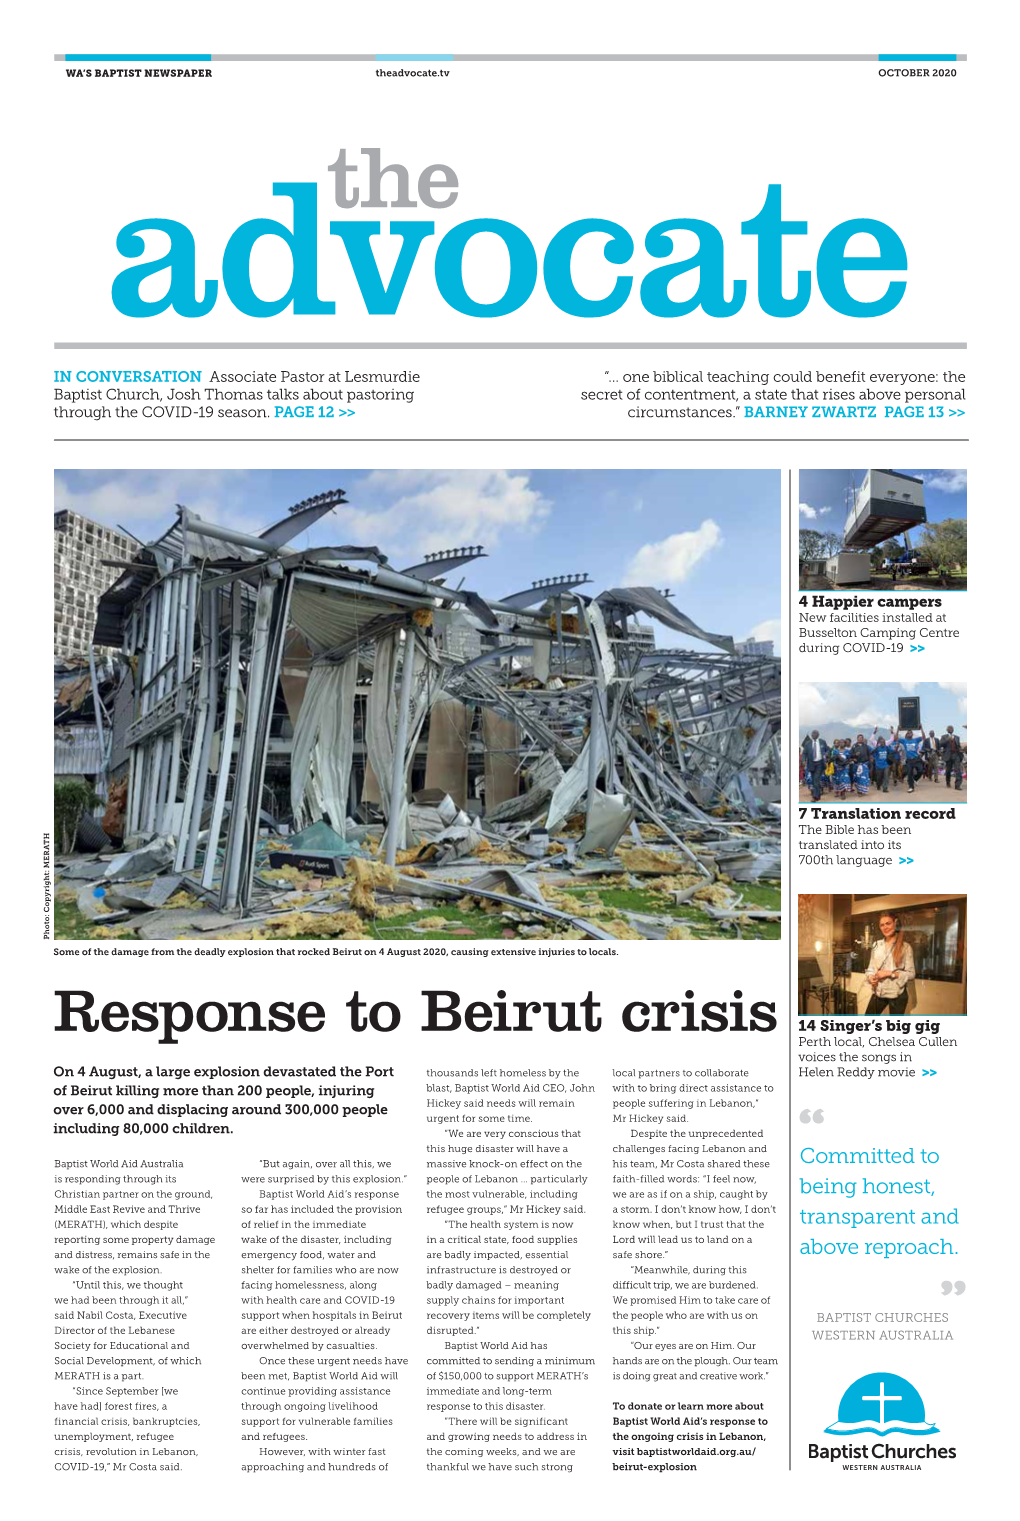 Response to Beirut Crisis